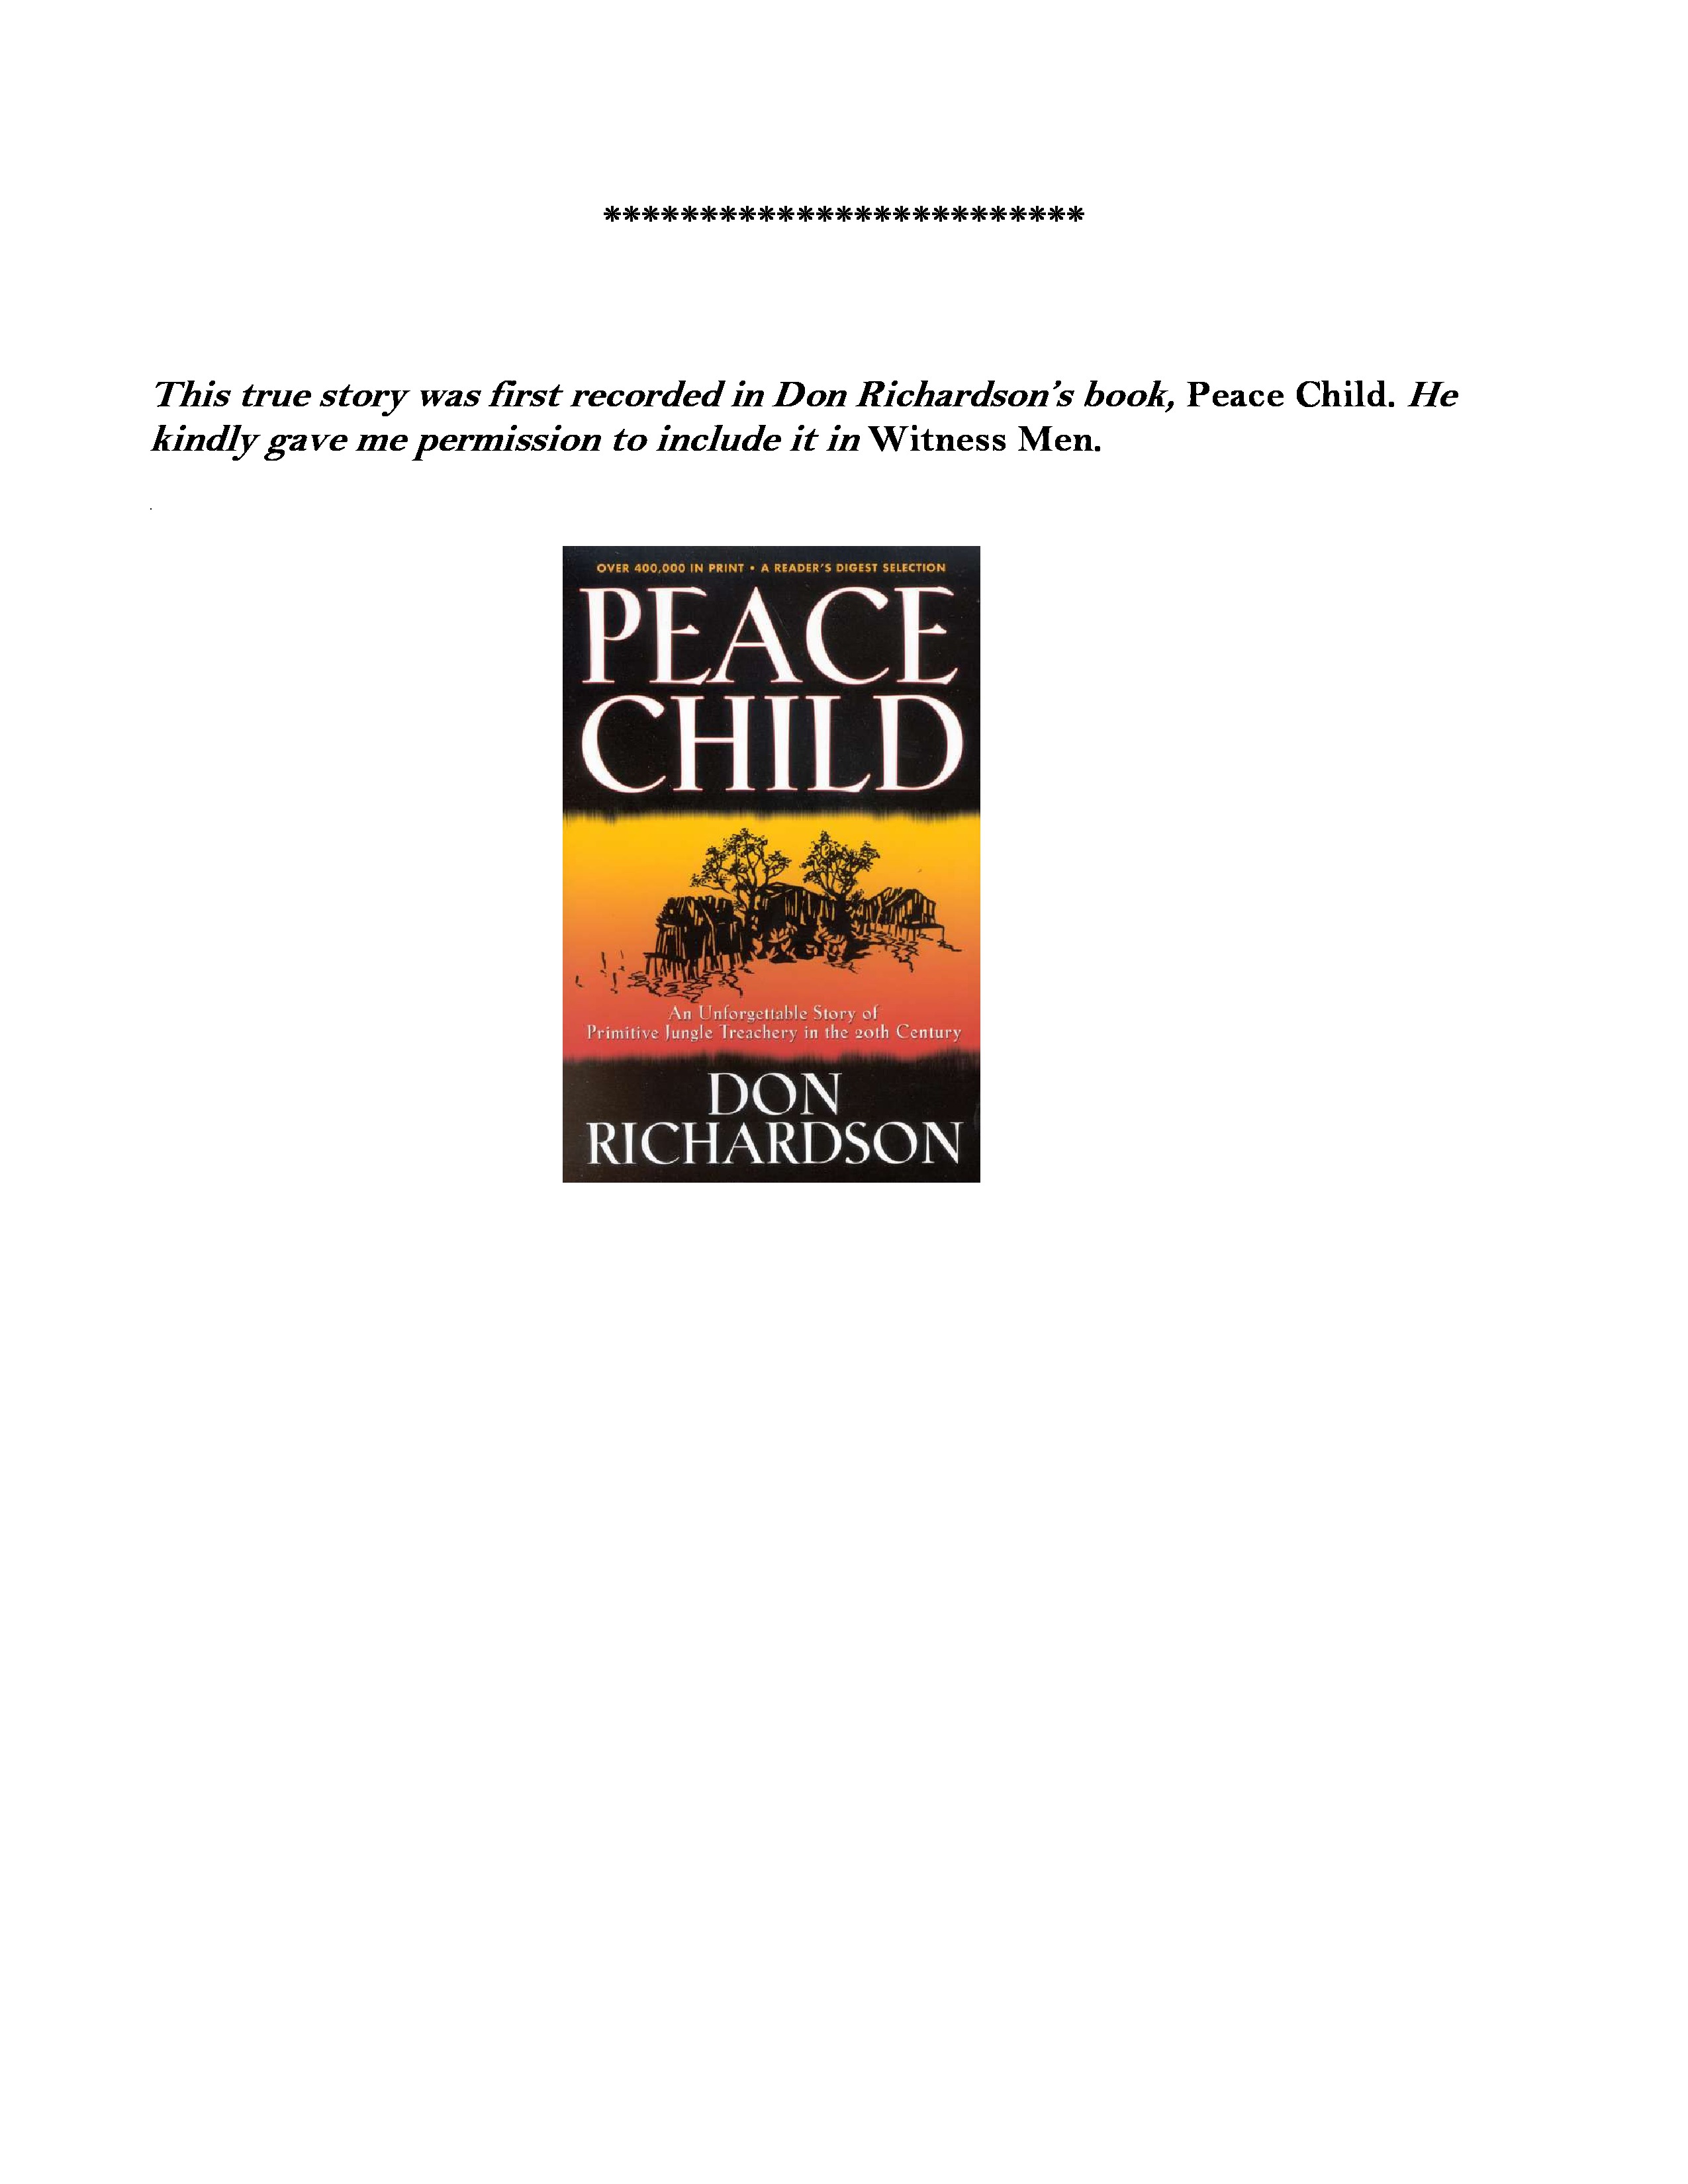 Peace Child photo essay page 14